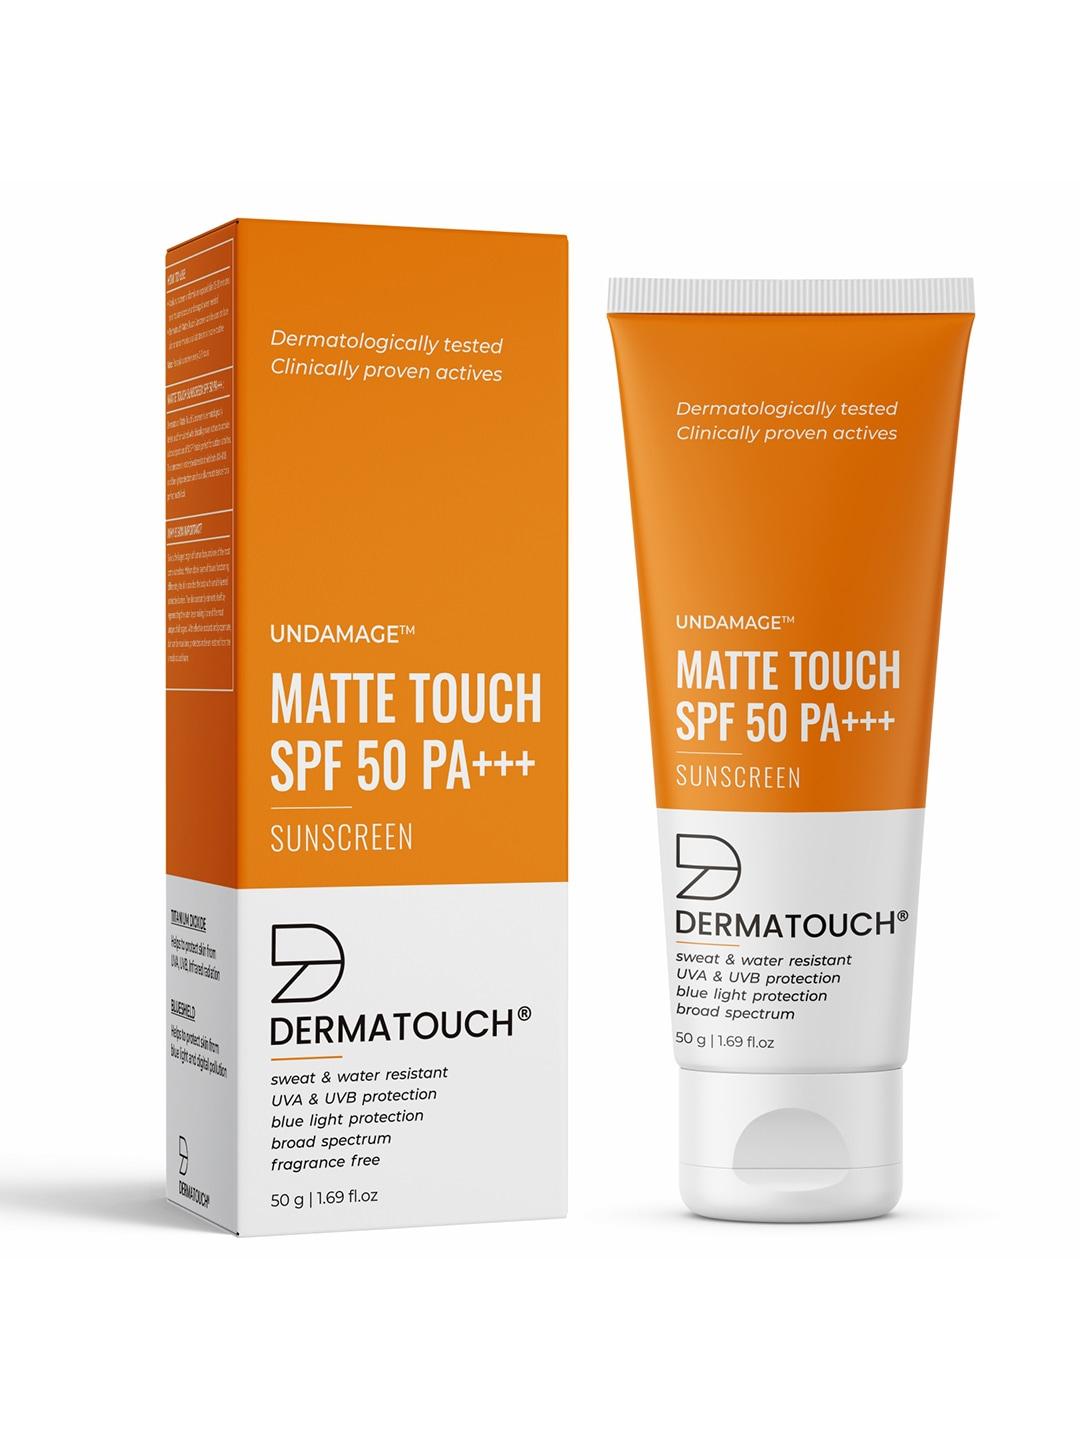 dermatouch undamage matte touch spf 50 pa +++ sunscreen - 50 g